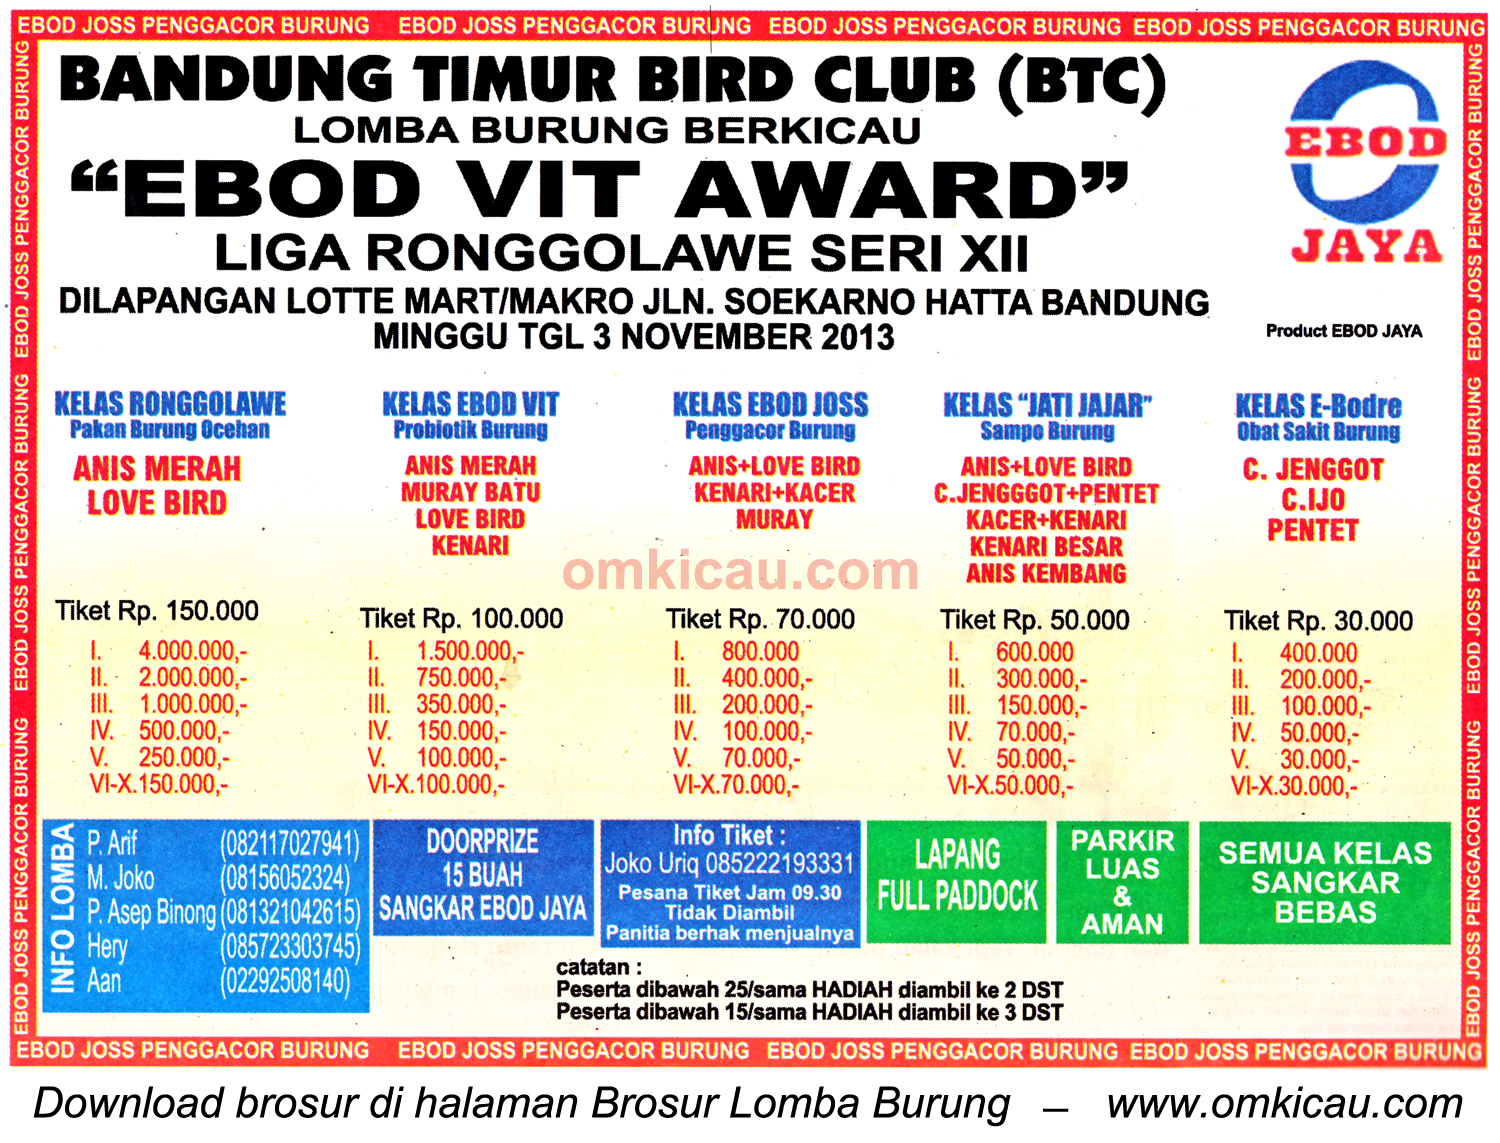 Brosur Lomba Burung Berkicau Ebod Vit Award (LRJ 12), Bandung, 3 November 2013